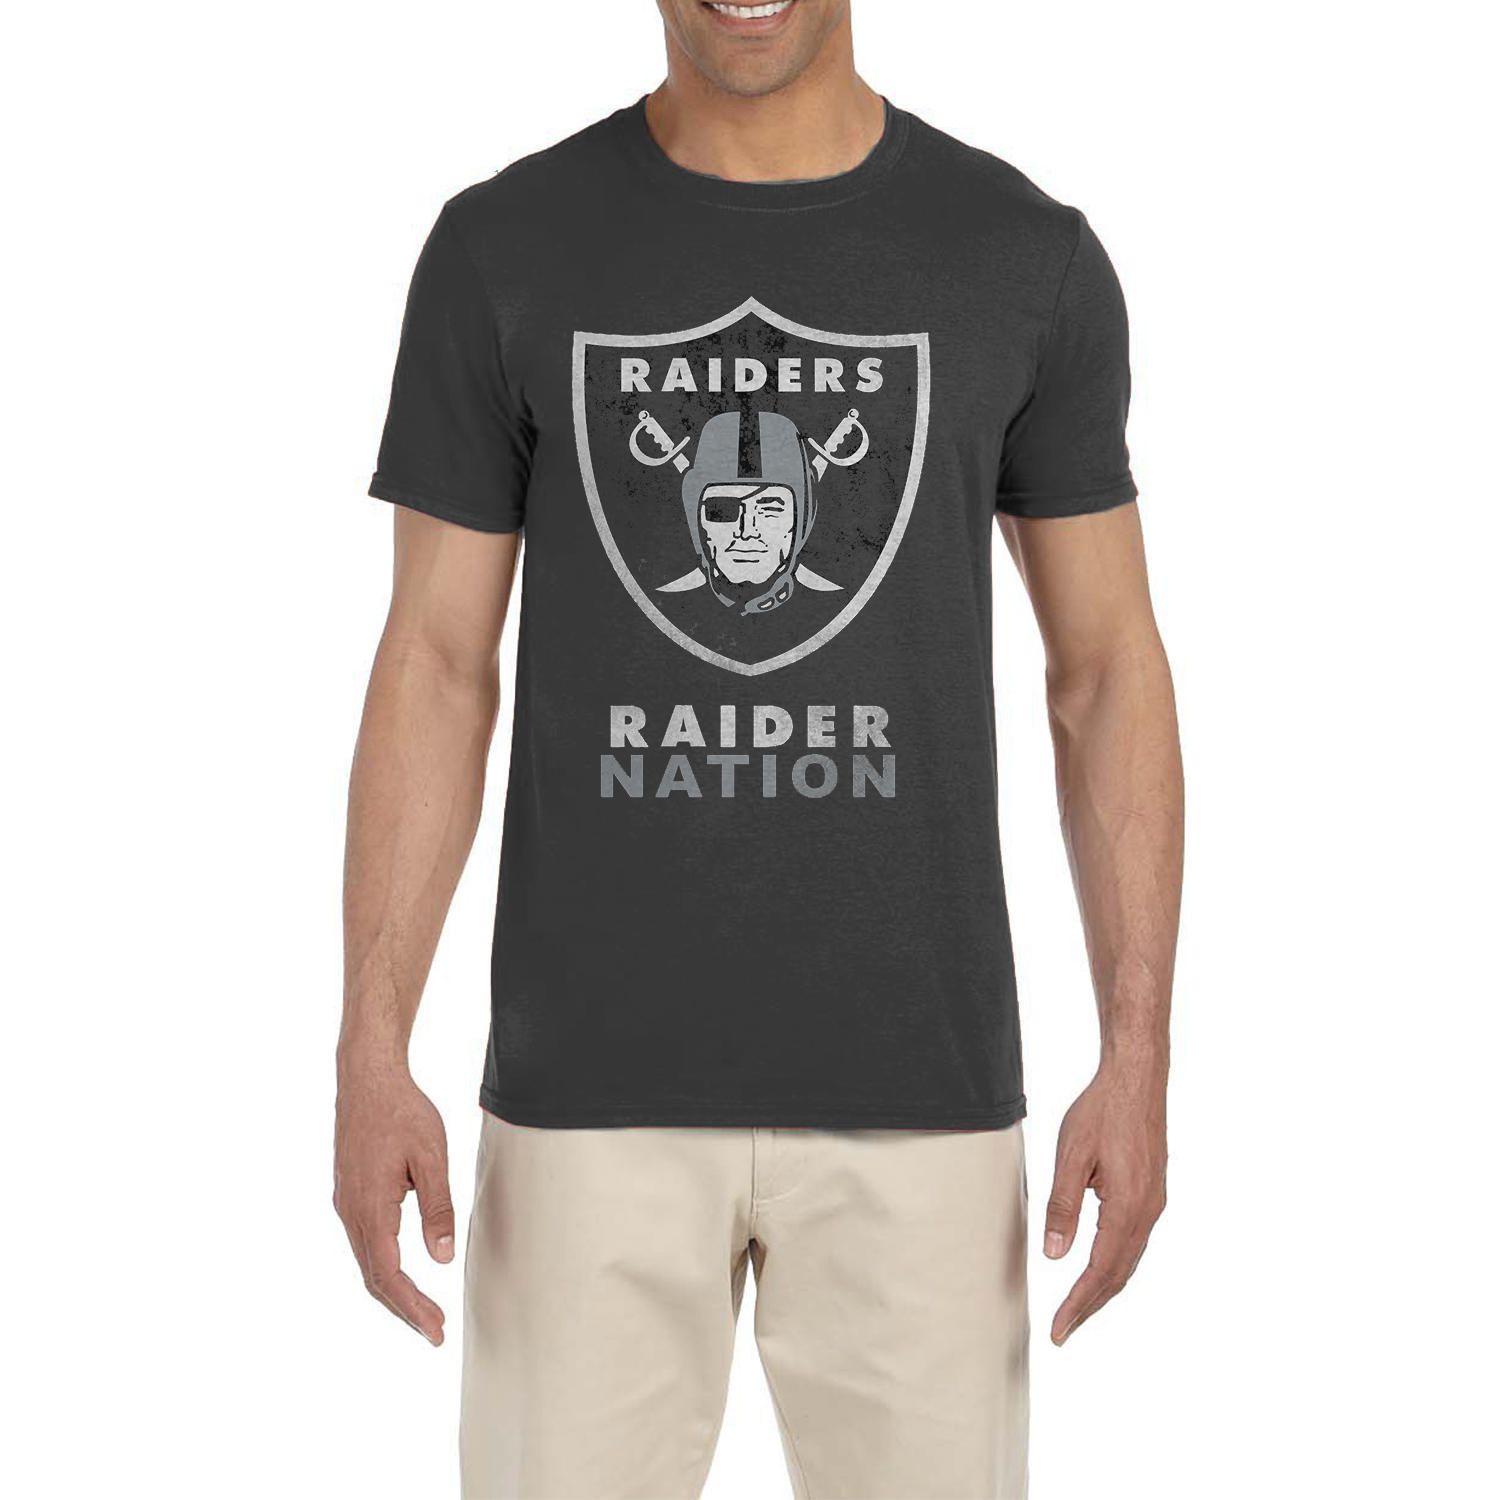 raider nation t shirts